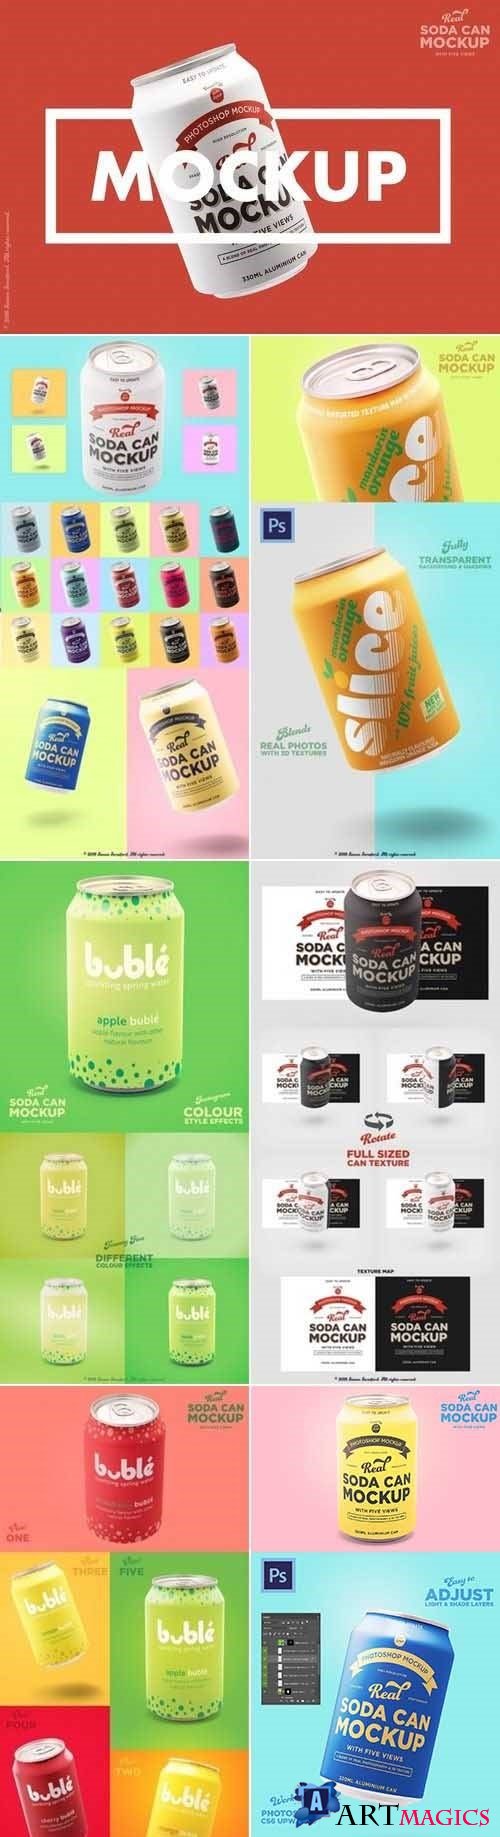 Tin soda can mockup branding designs - 2954747